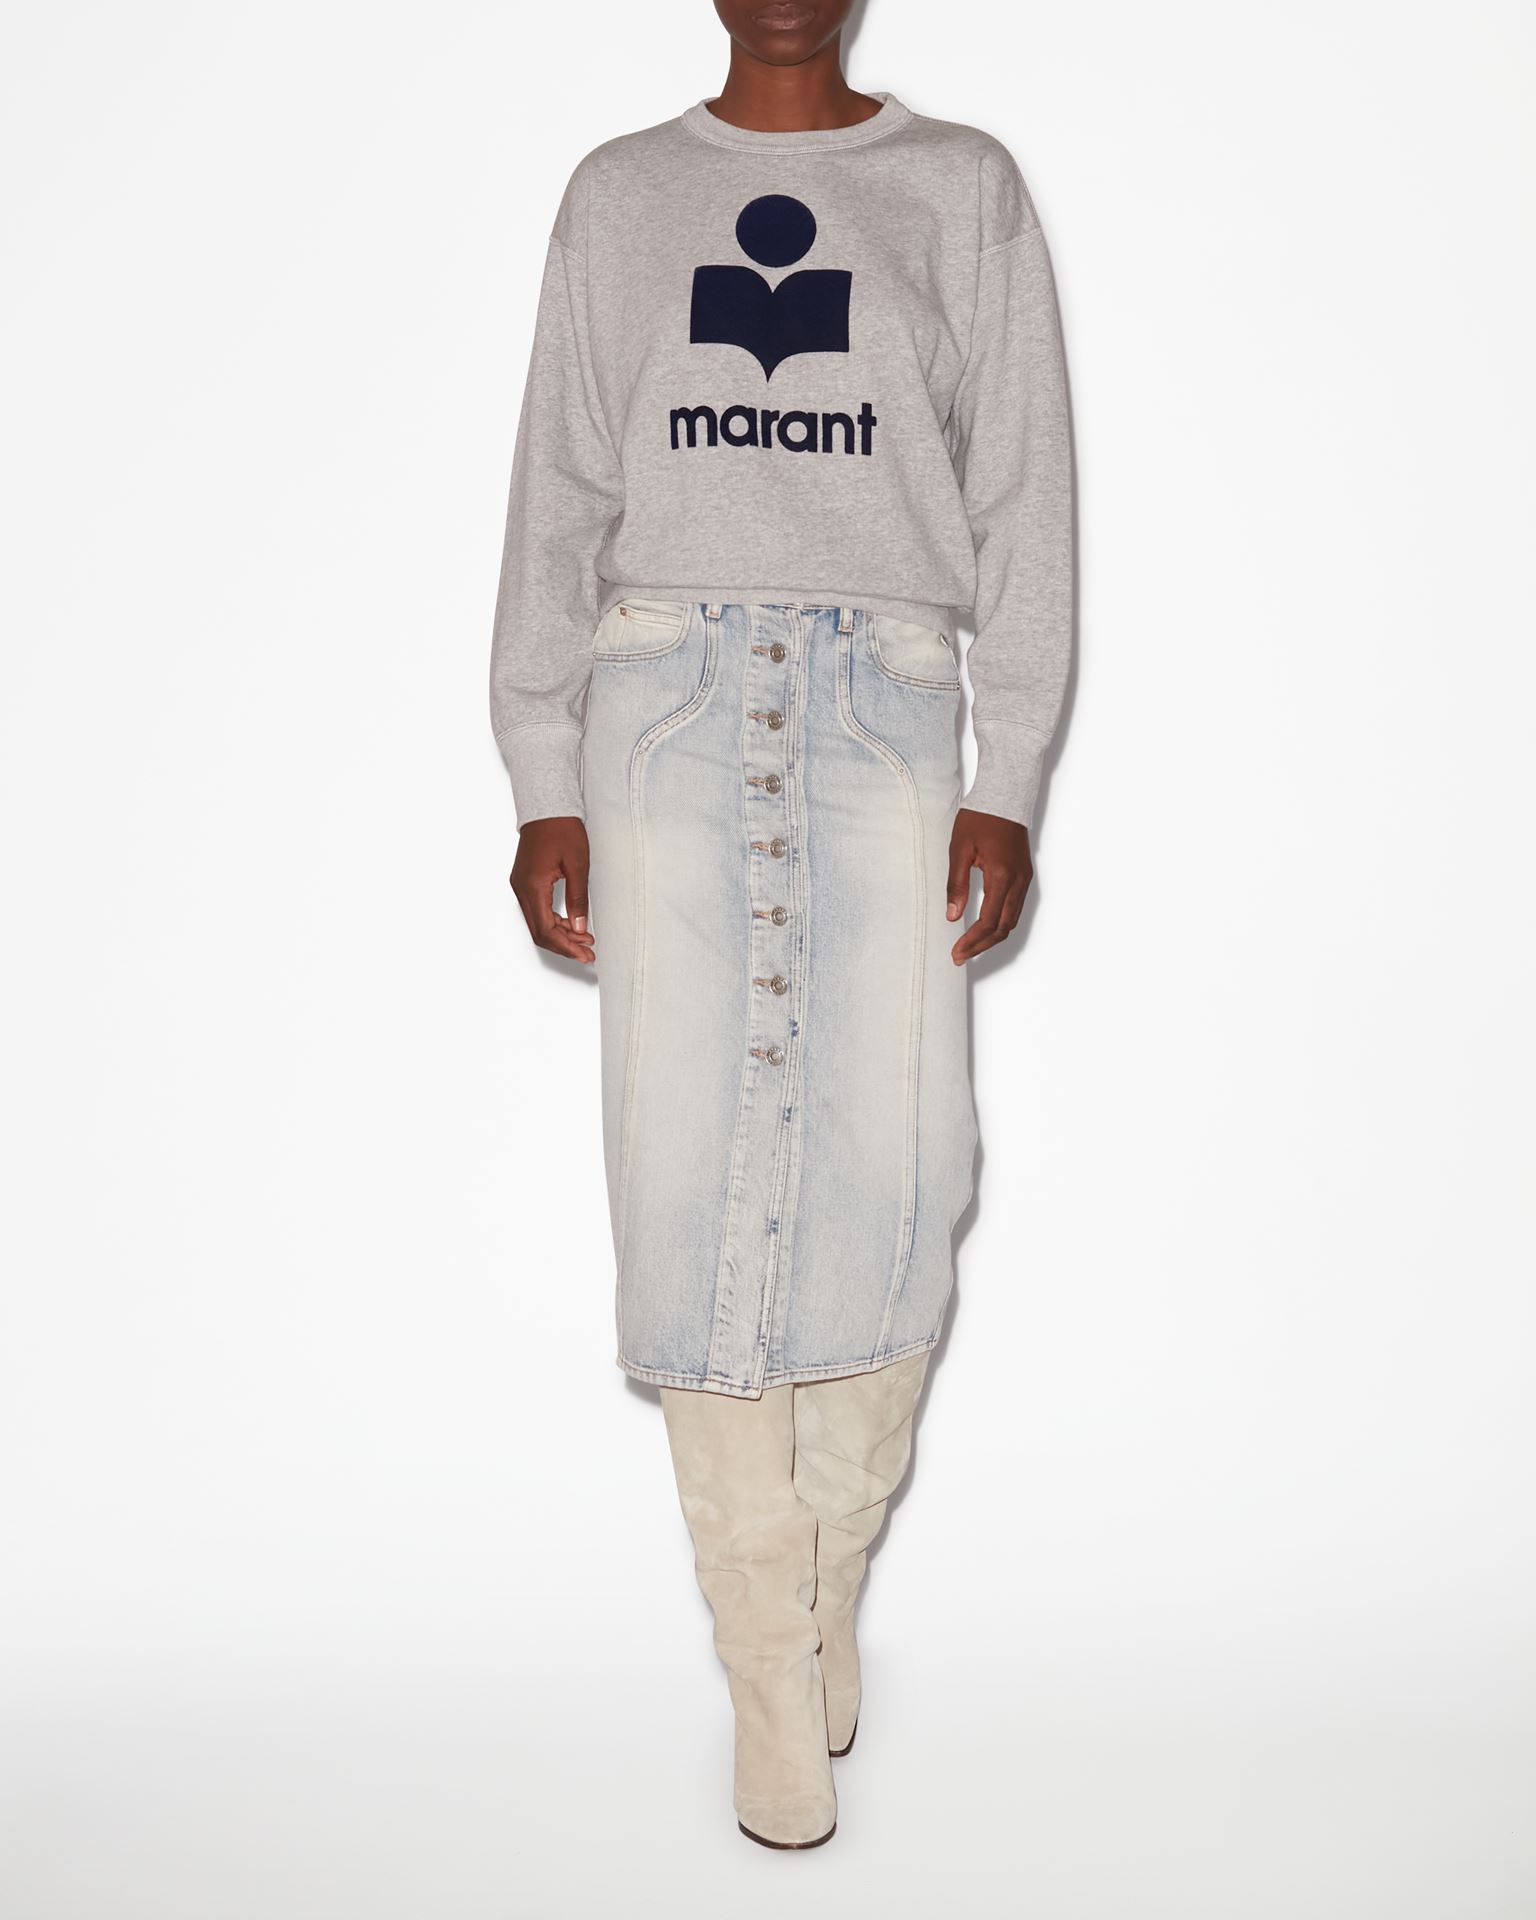 Isabel Marant Marant Étoile, Mobyli Logo Sweatshirt - Women - Grey